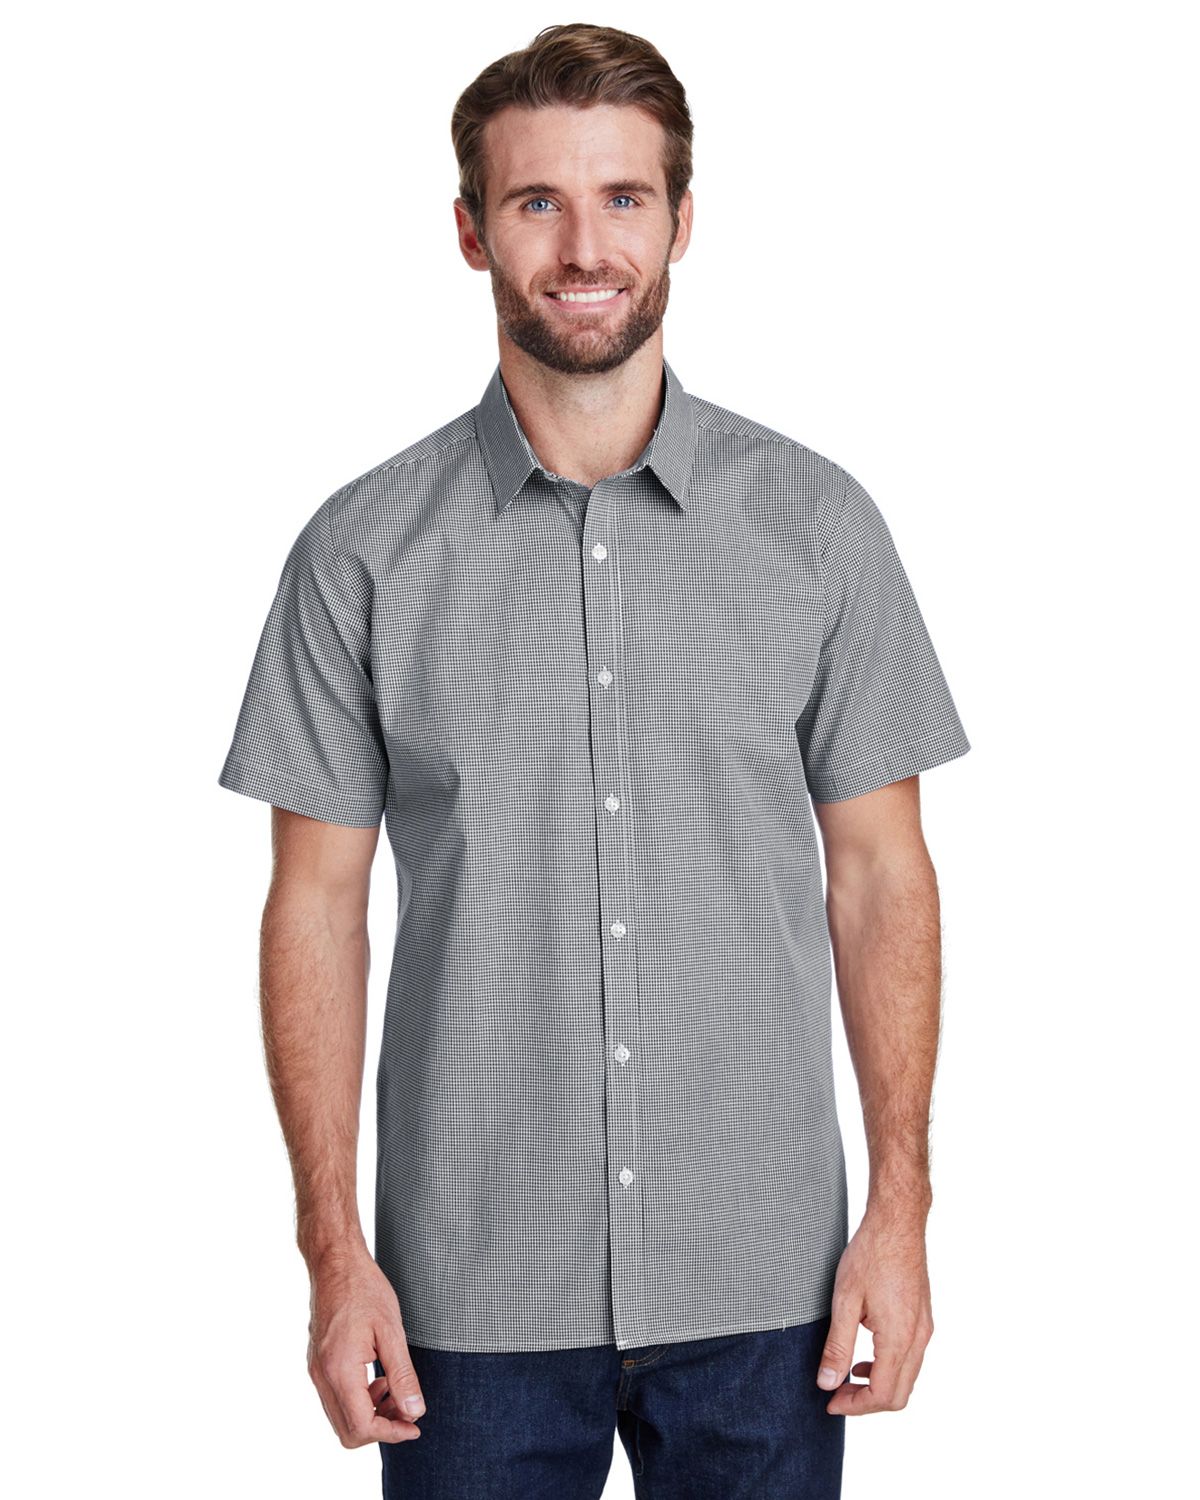 Artisan Collection RP221 Men's Microcheck Gingham Short-Sleeve Cotton Shirt